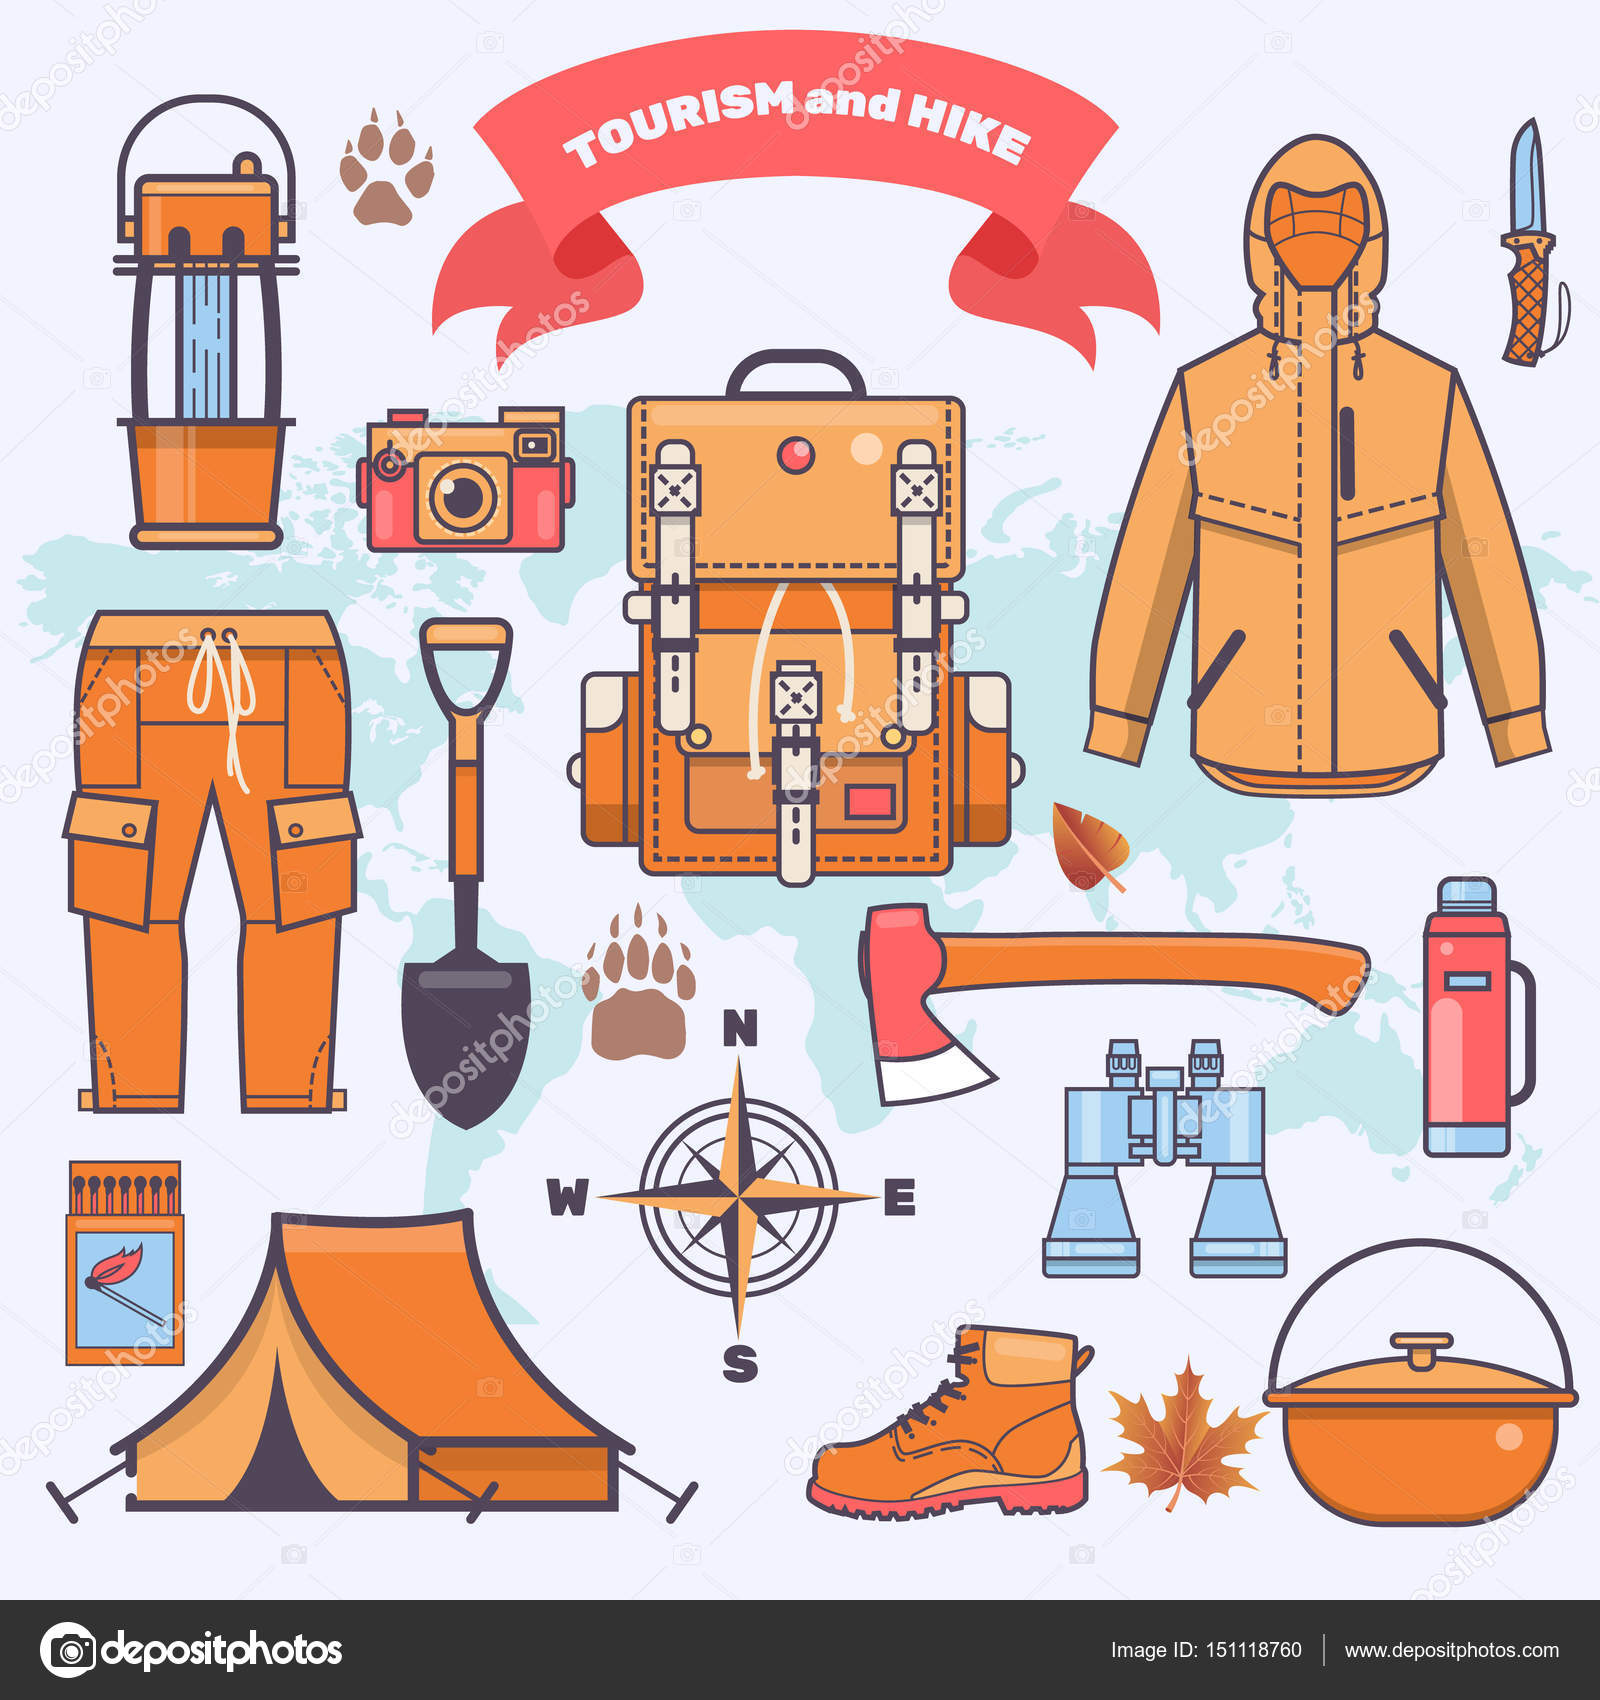 https://st3.depositphotos.com/8853526/15111/v/1600/depositphotos_151118760-stock-illustration-camping-and-hiking-equipment-and.jpg